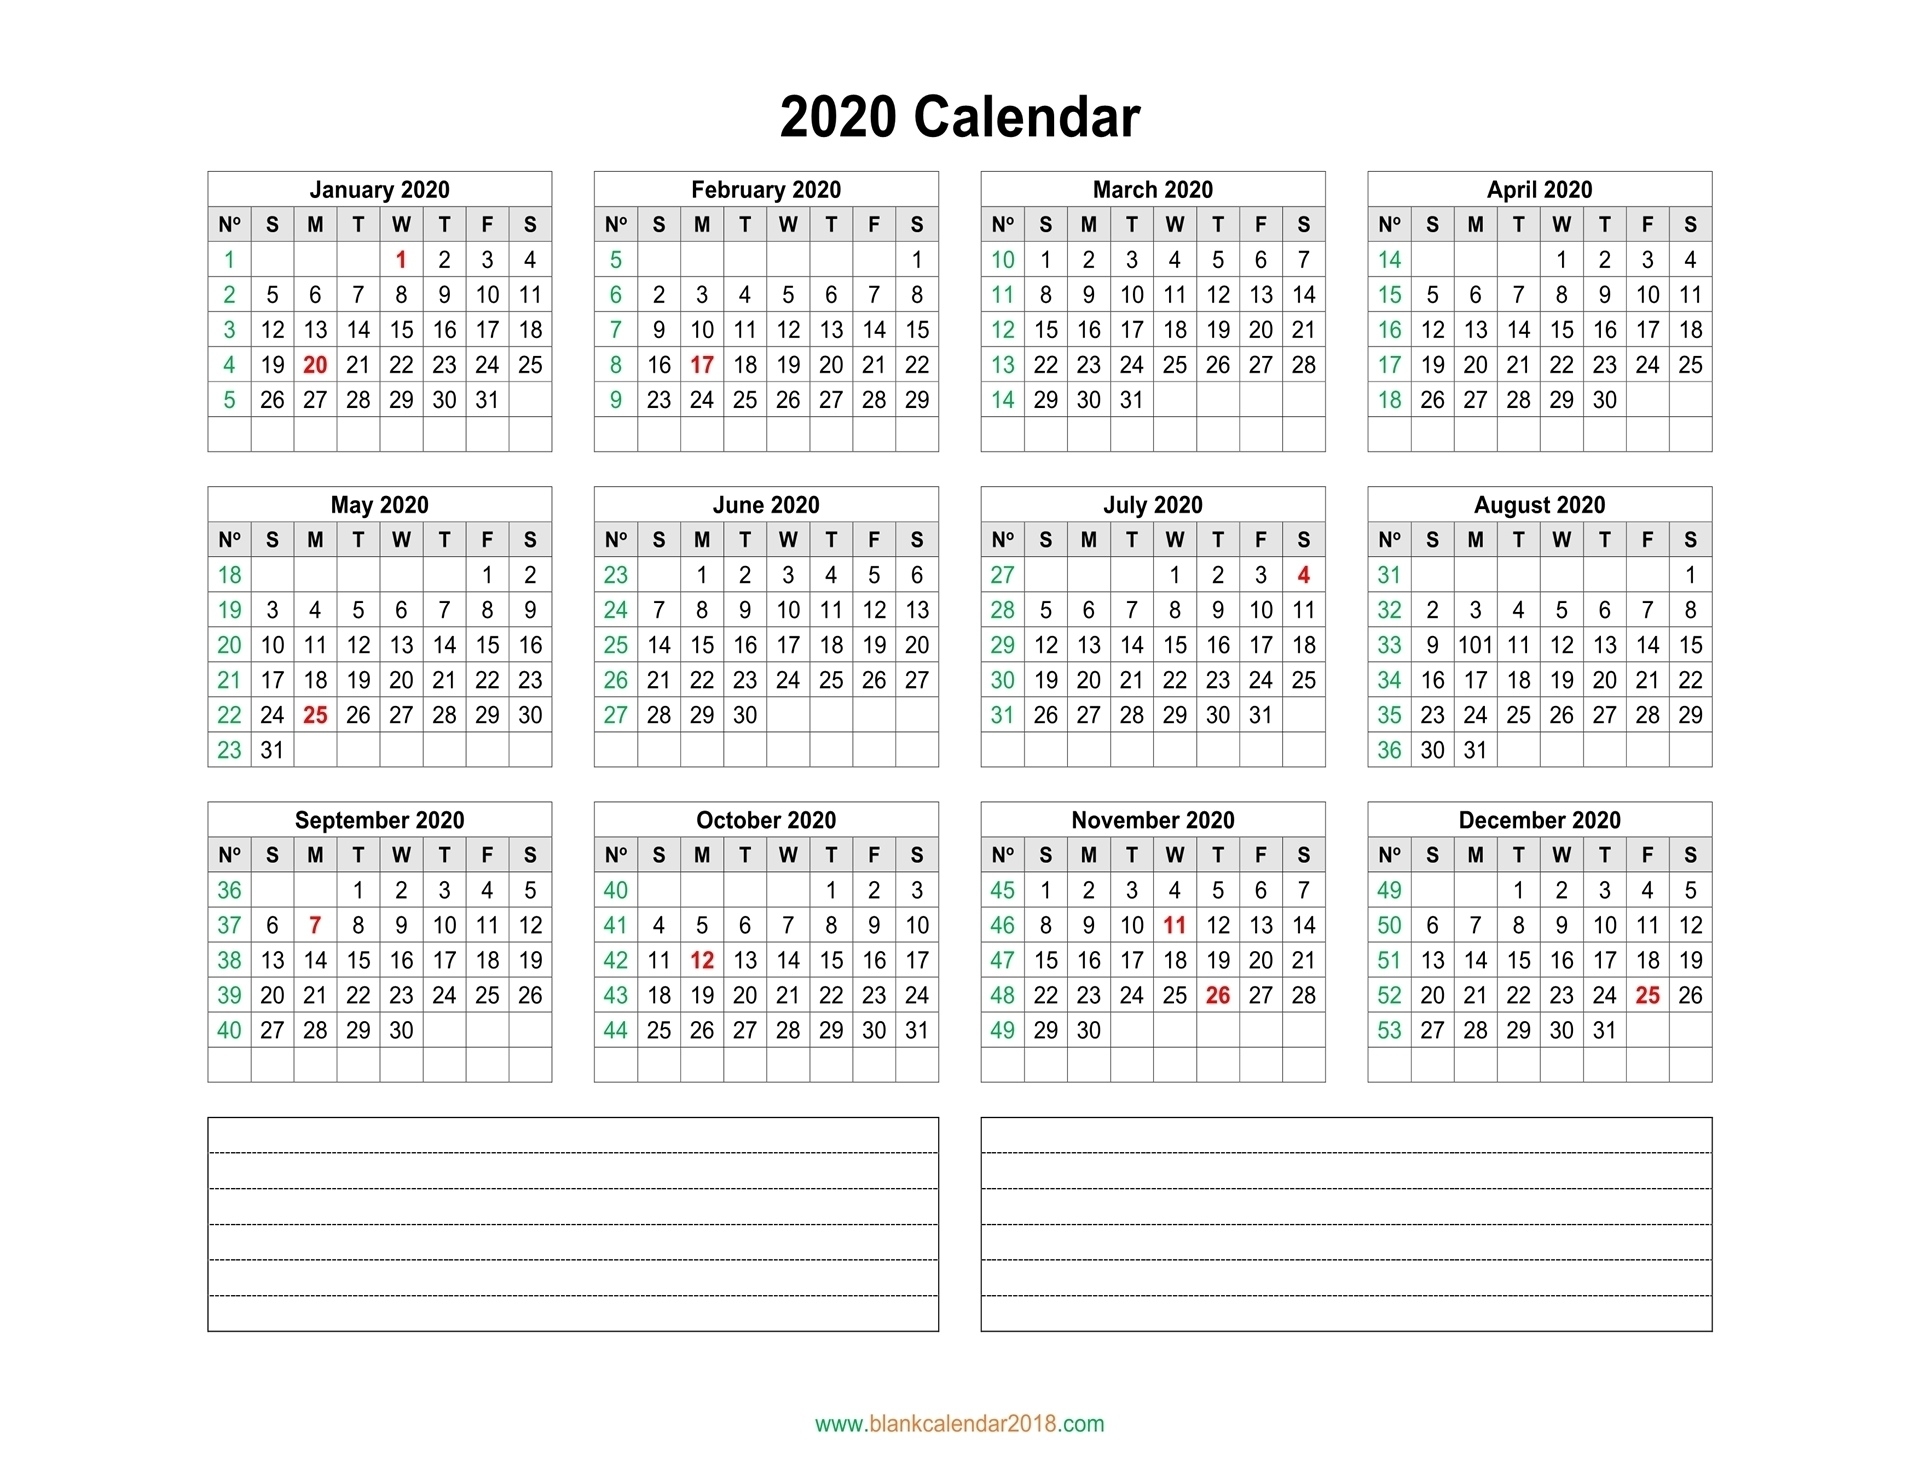 Hong Kong 2020 Monthly Calendar Templates | Monthly Hong Kong Calander 2020 Template